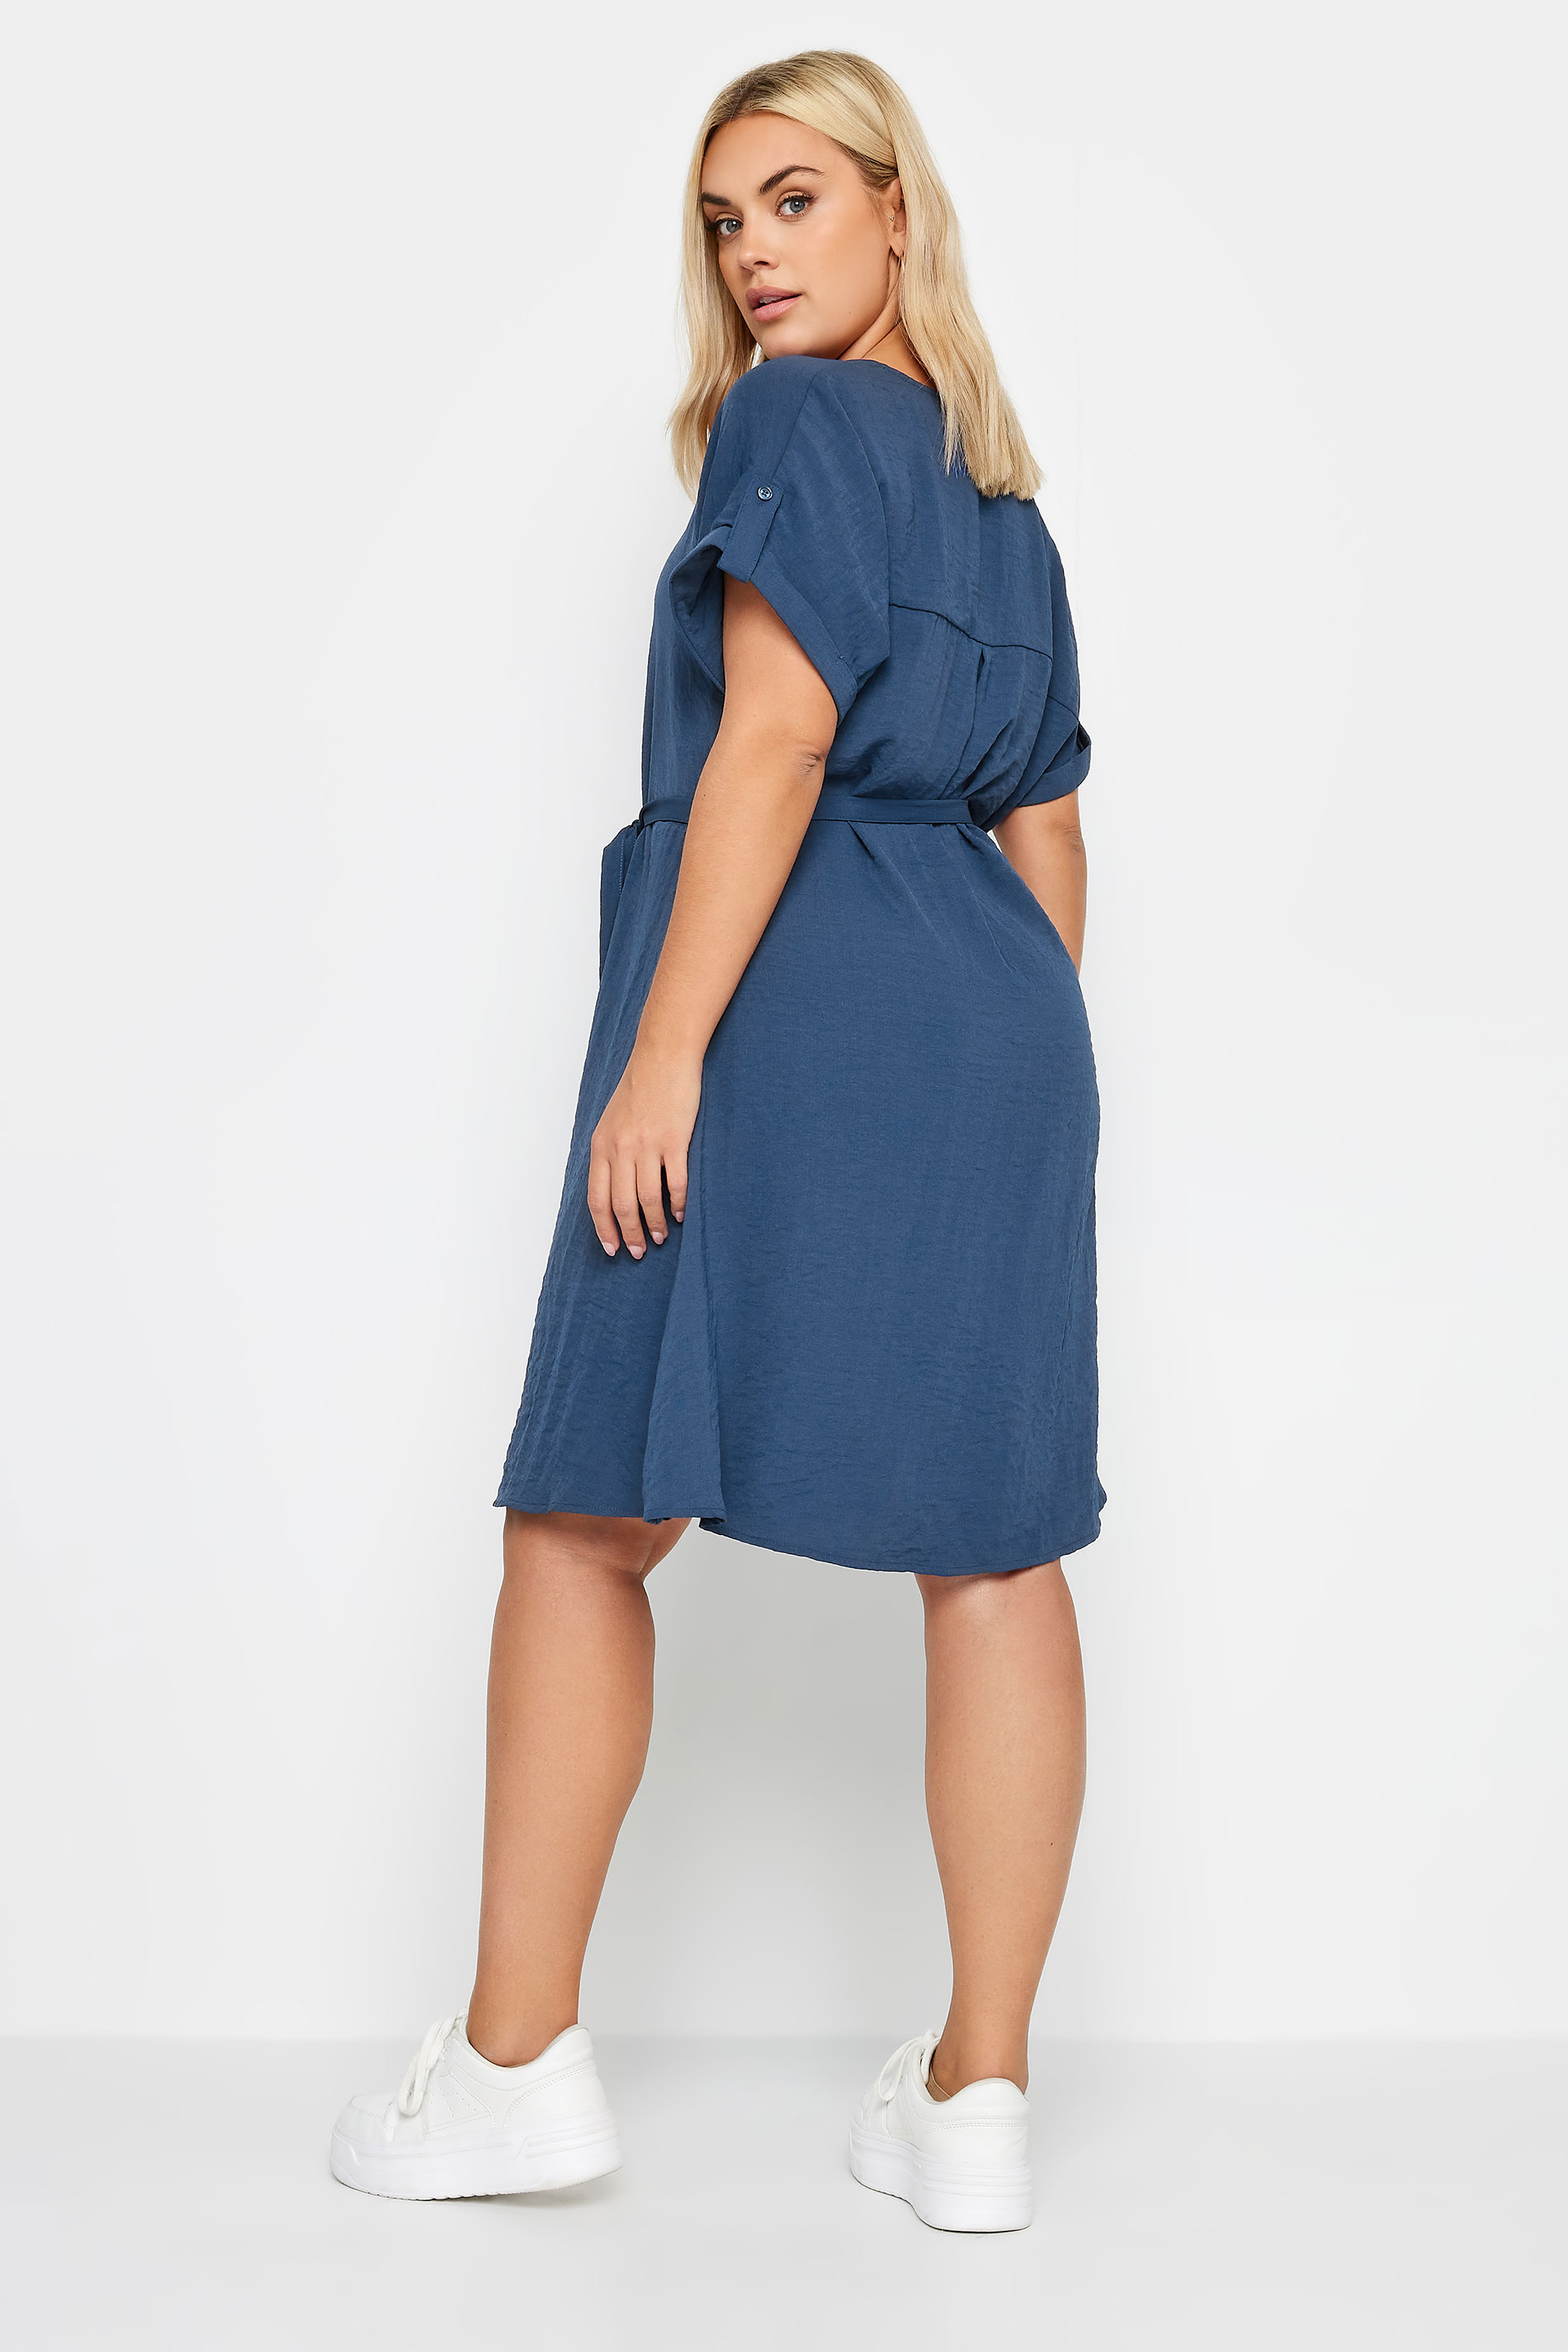 YOURS Plus Size Navy Blue Utility Shirt Mini Dress | Yours Clothing  3